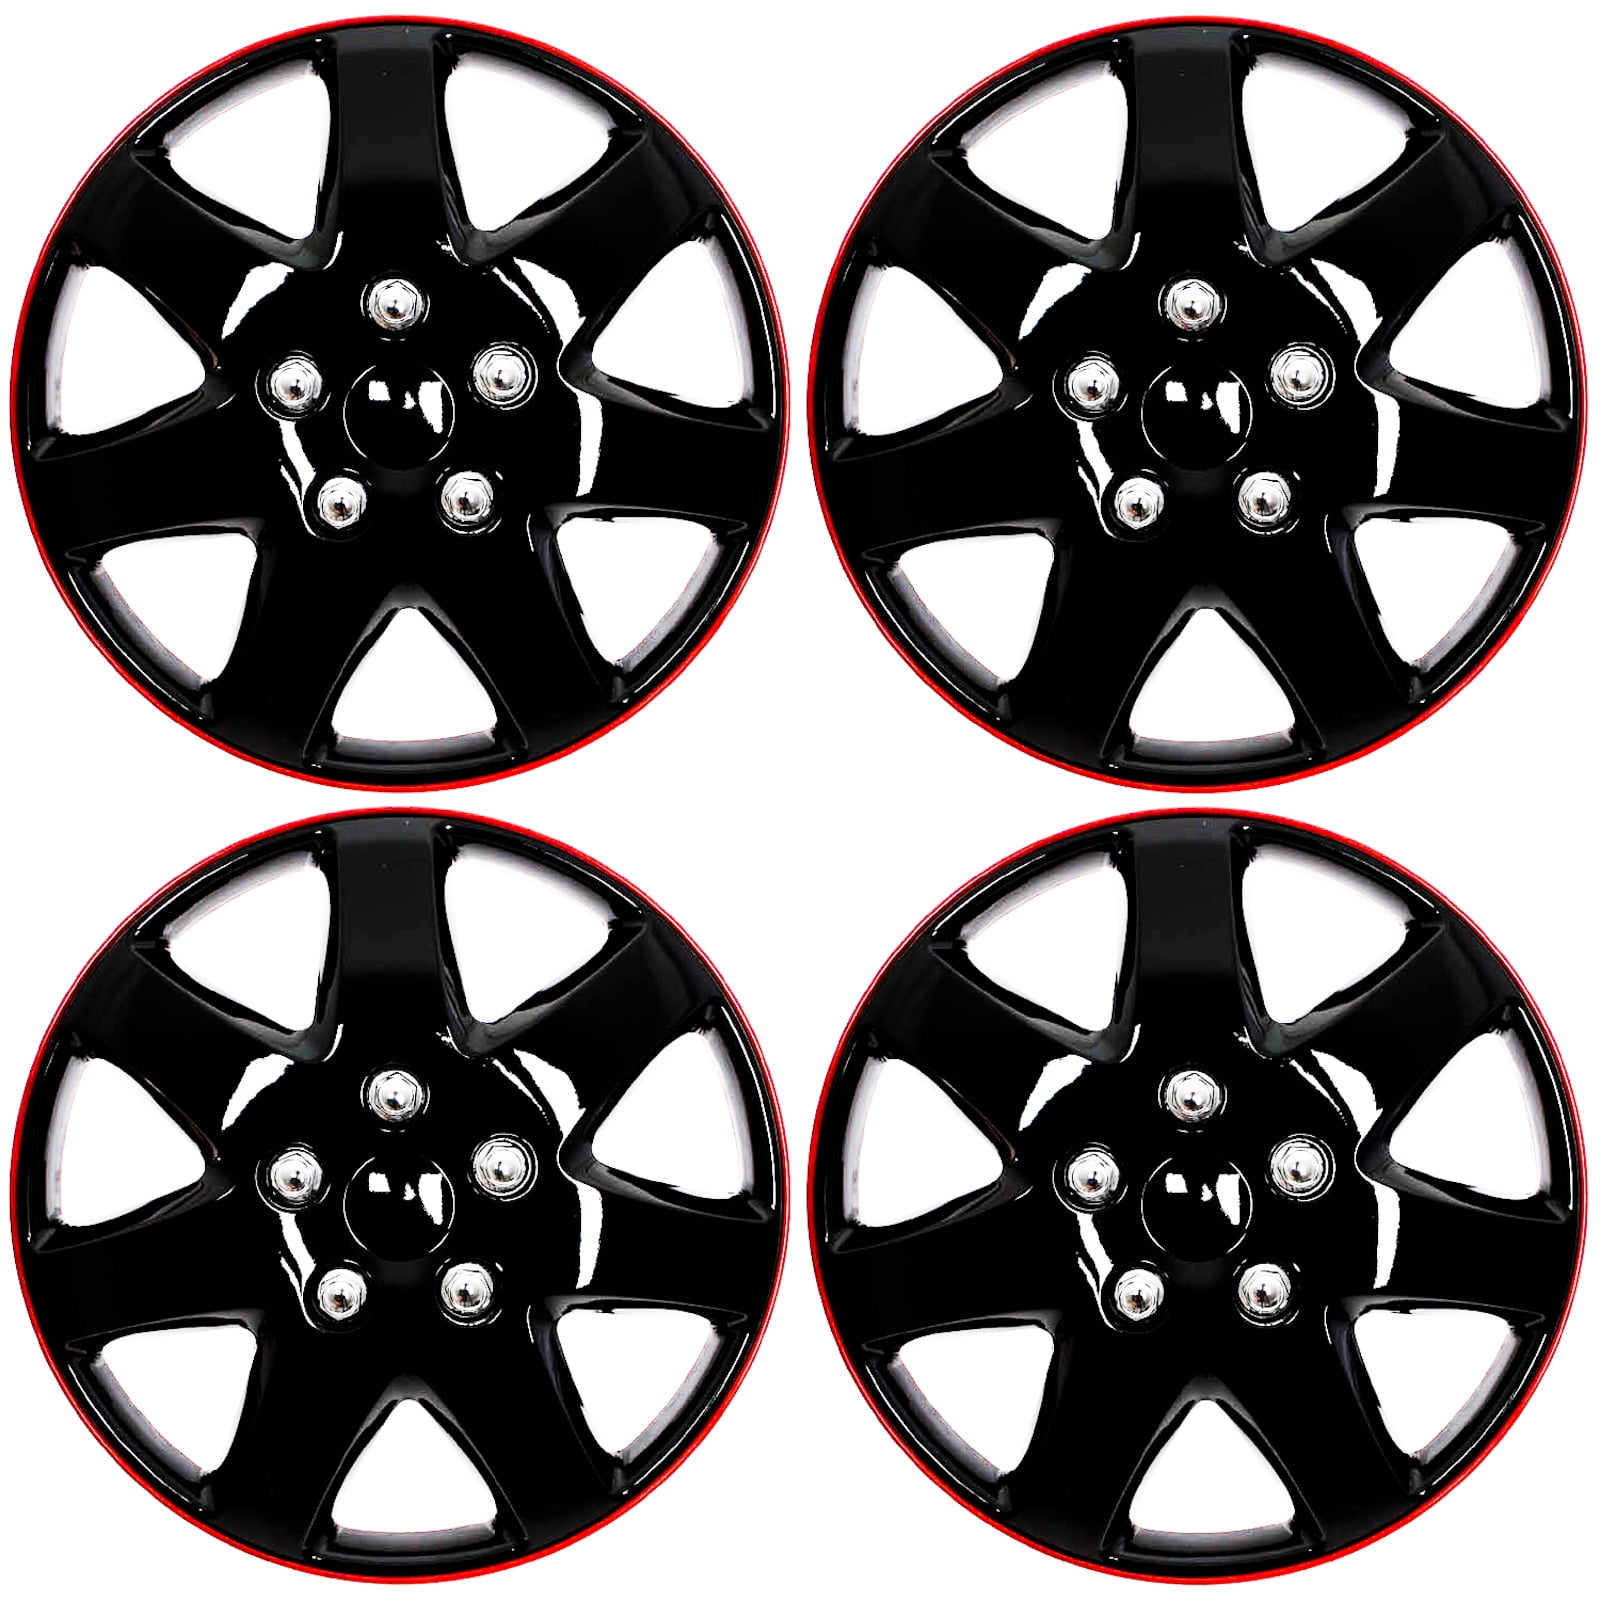 Set of 4 Black Label Premium Wheel Cover Finish ABS Hubcap For 16" Wheel 